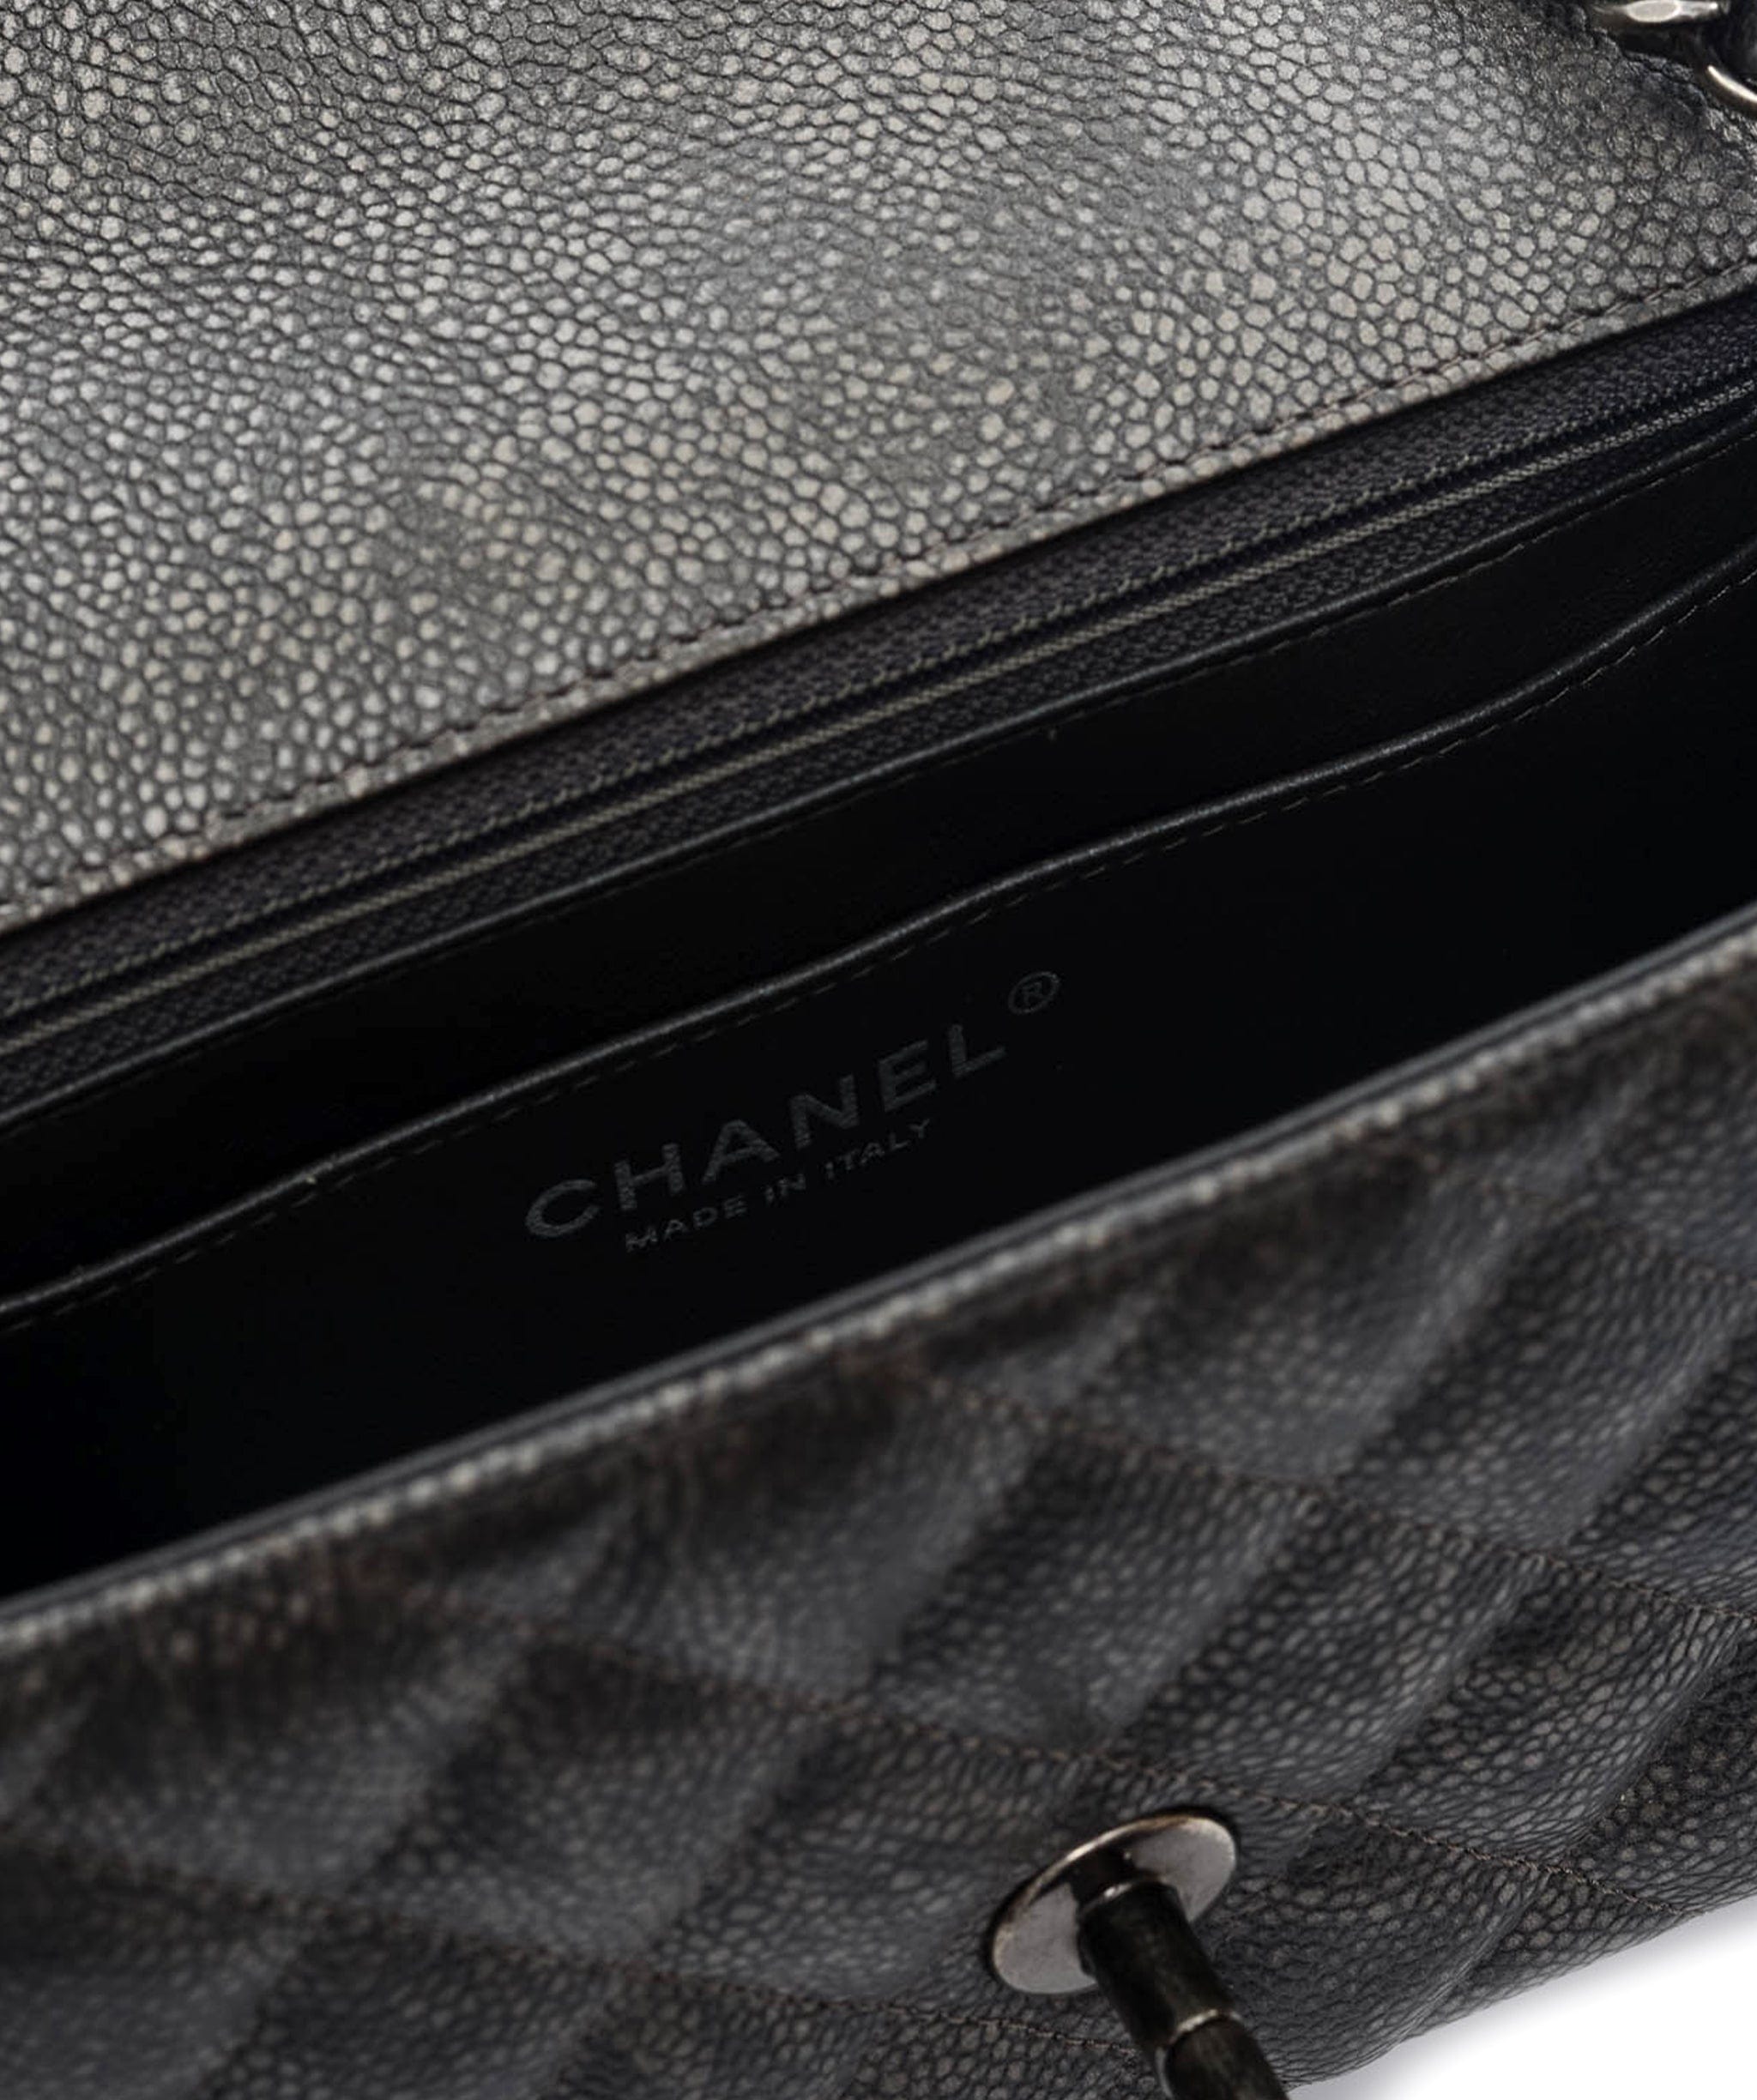 Chanel Chanel Classic Mini Rectangle Flap - Gunmetal Silver Caviar Brushed Ruthenium SKC1133